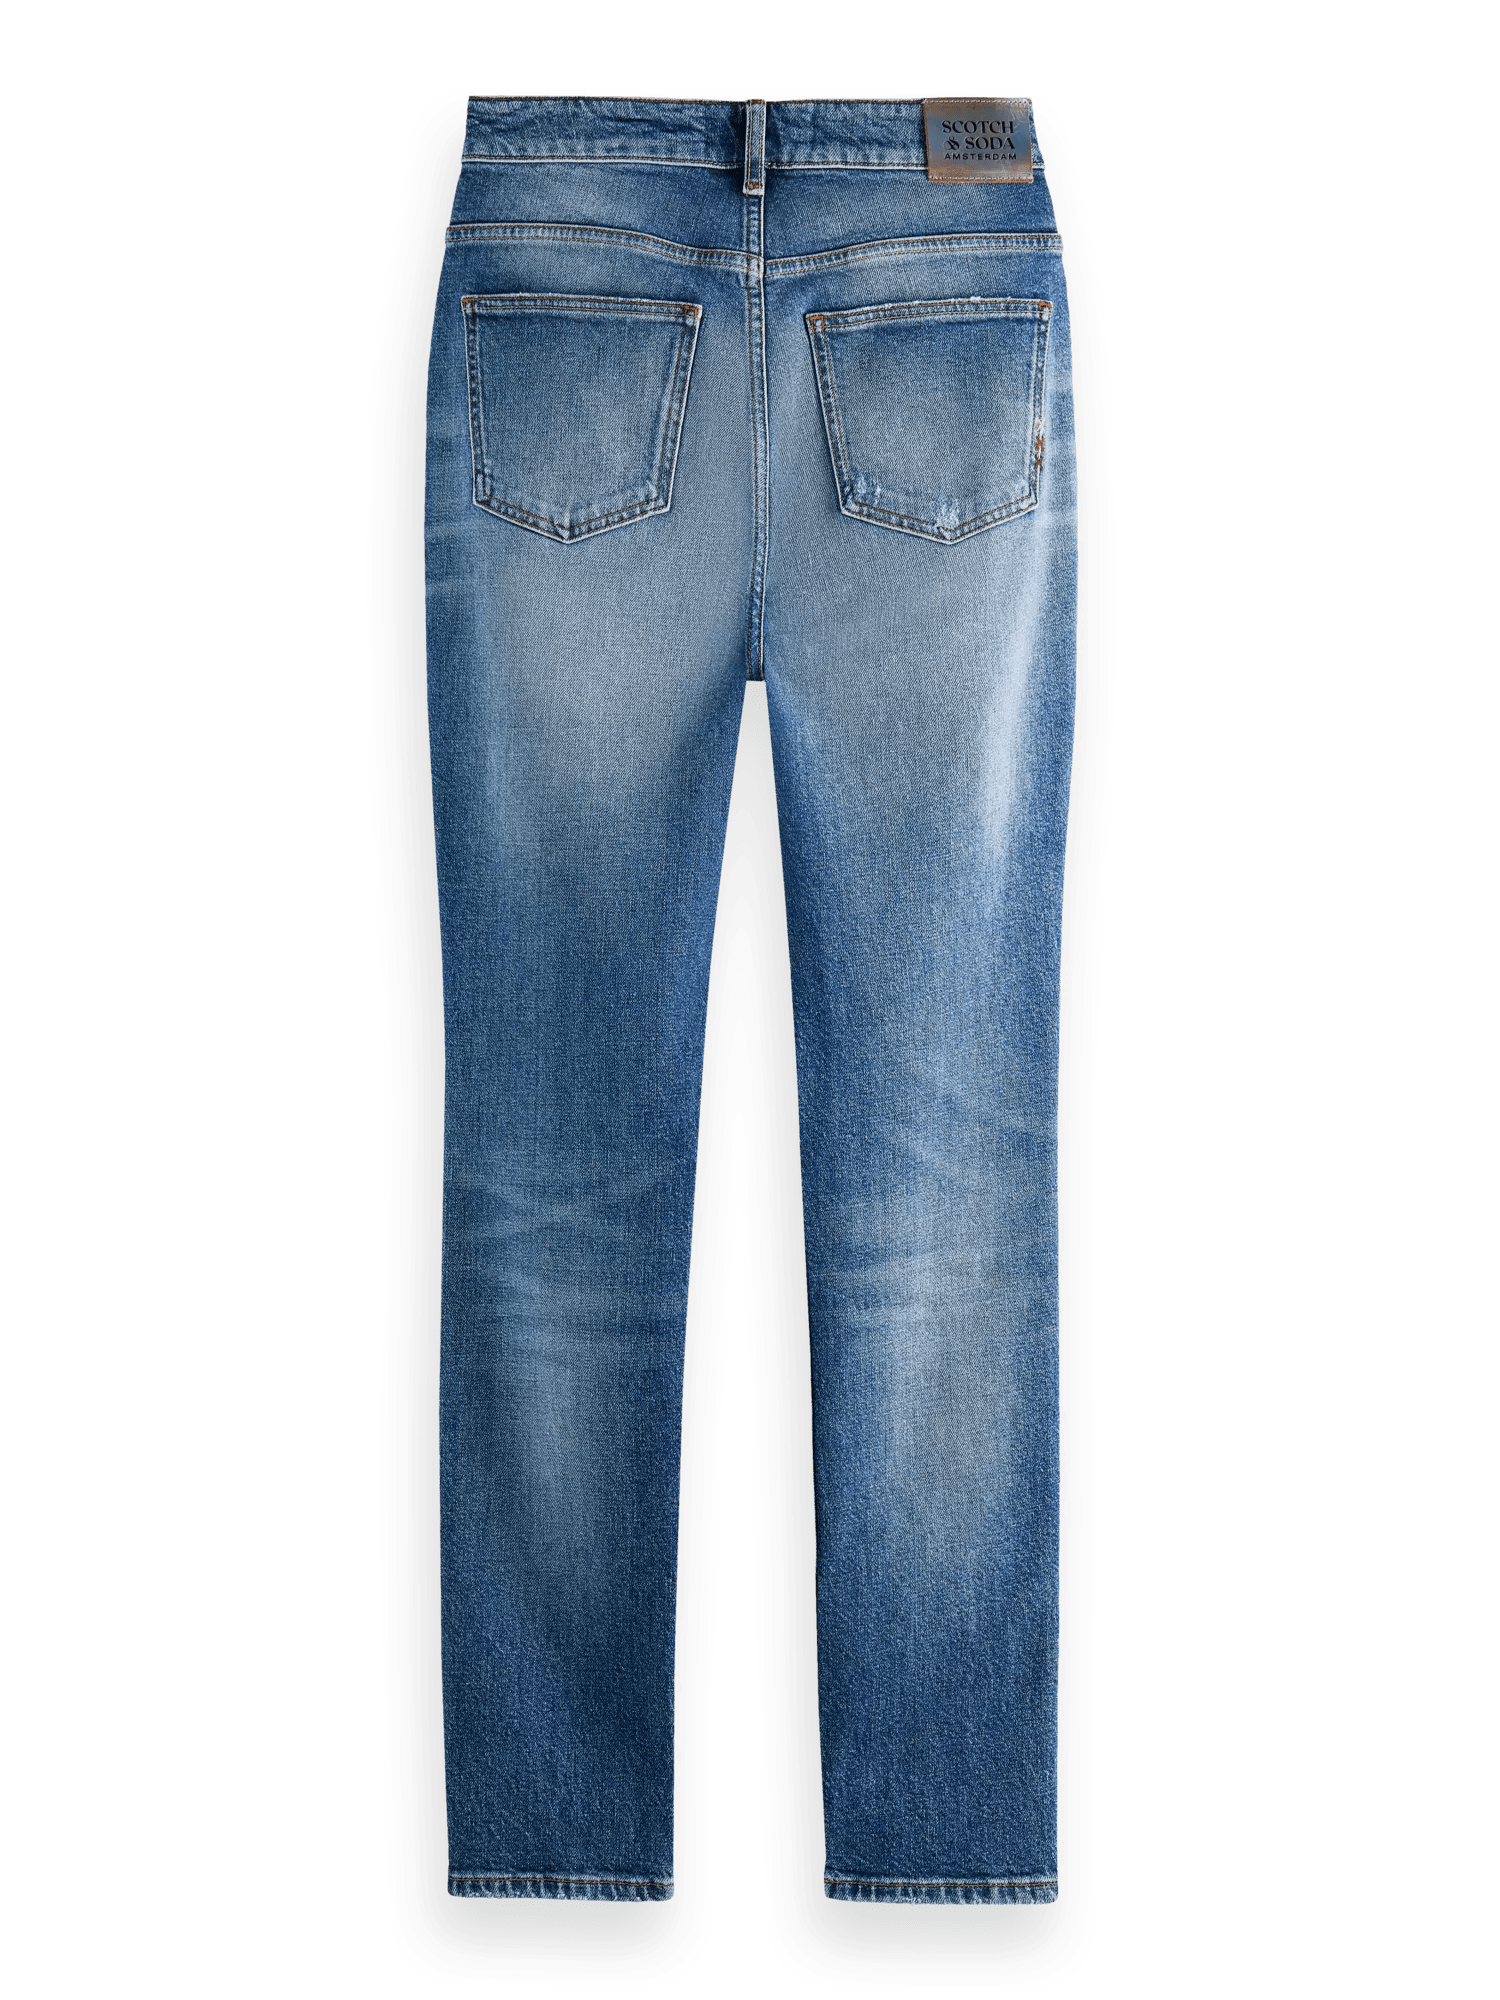 Scotch & Soda The Line Jeans im High-Rise Skinny Fit aus Bio-Baumwolle BCK